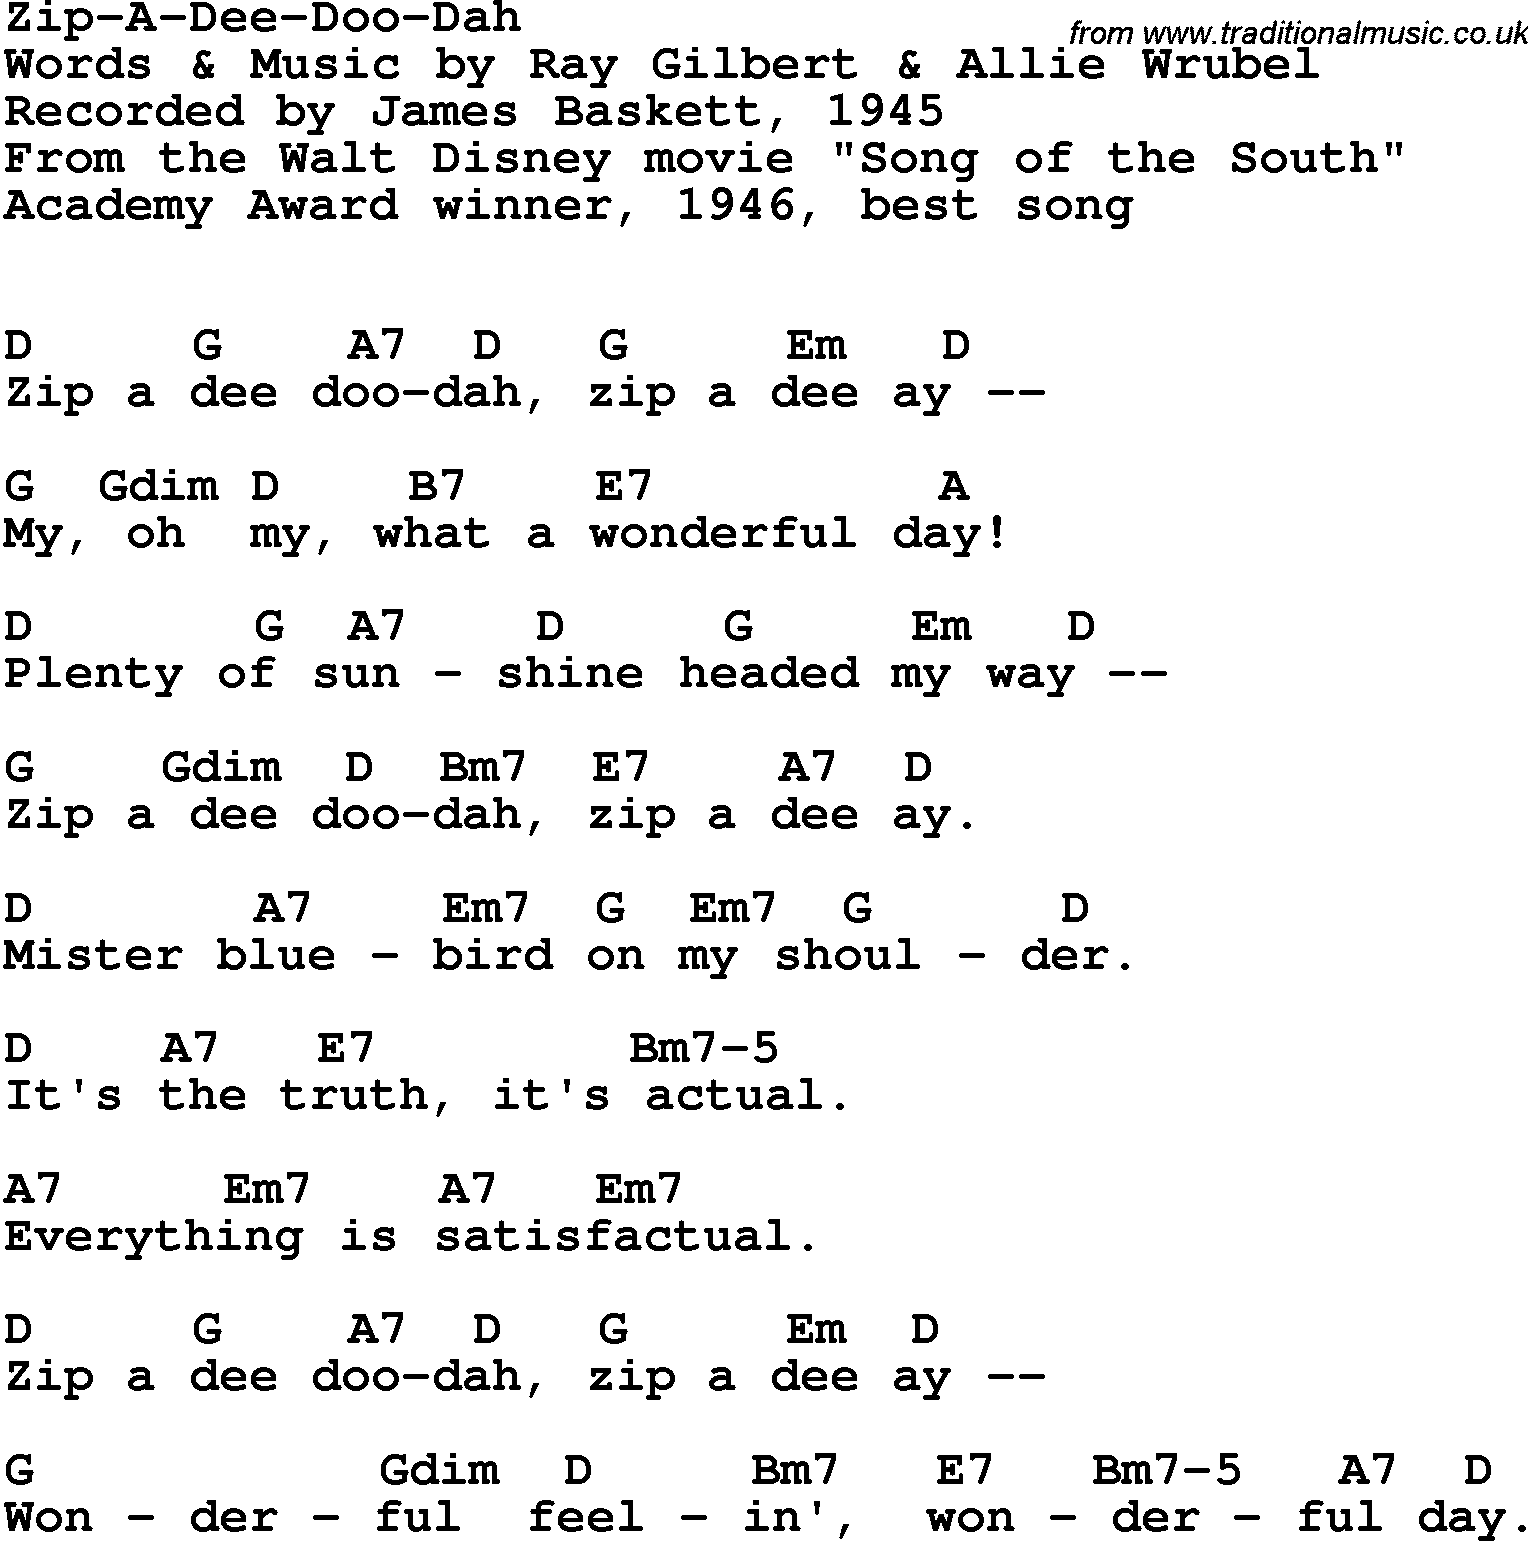 Song Lyrics with guitar chords for Zip-a-dee-doo-dah - James Baskett, 1946